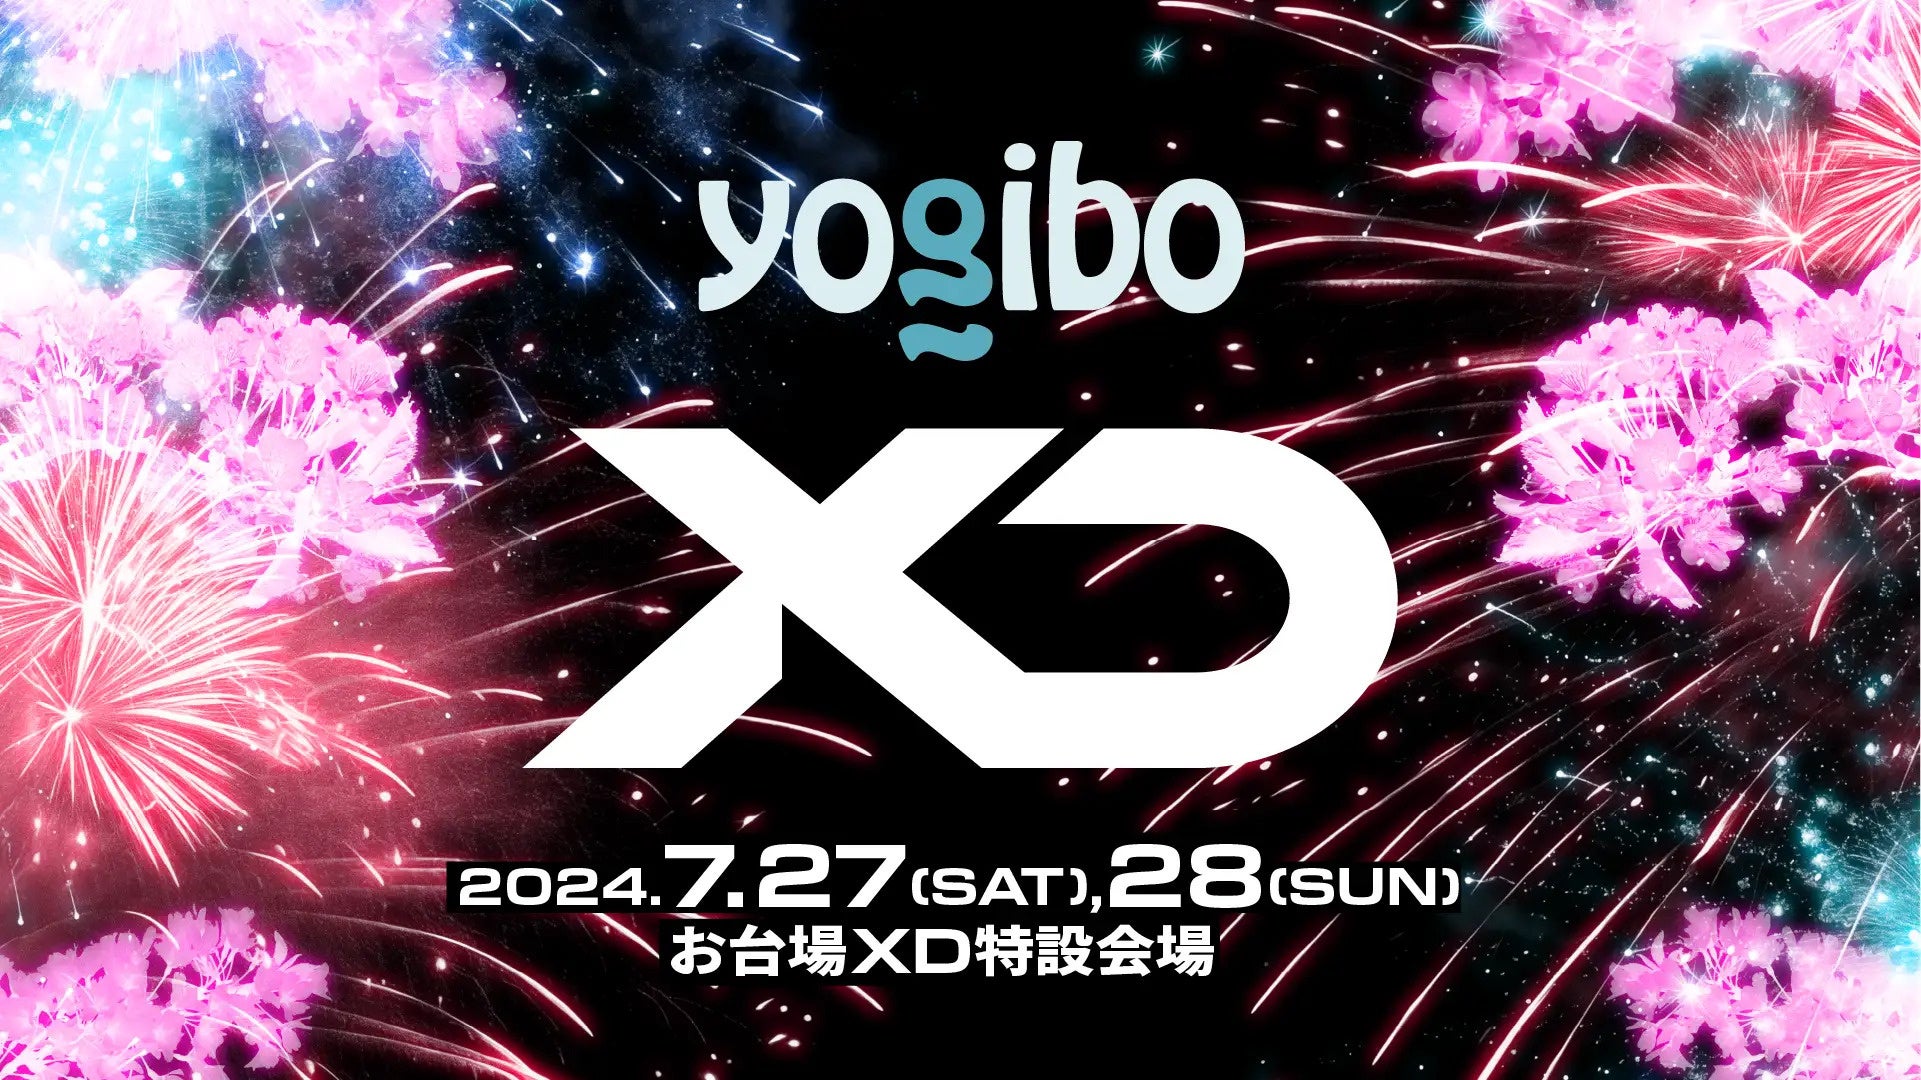 「XD World Music Festival presented by Yogibo」が「XANA SUMMIT 2024」とパートナーシップを提携メタバース上でもXDのコンテンツを展開